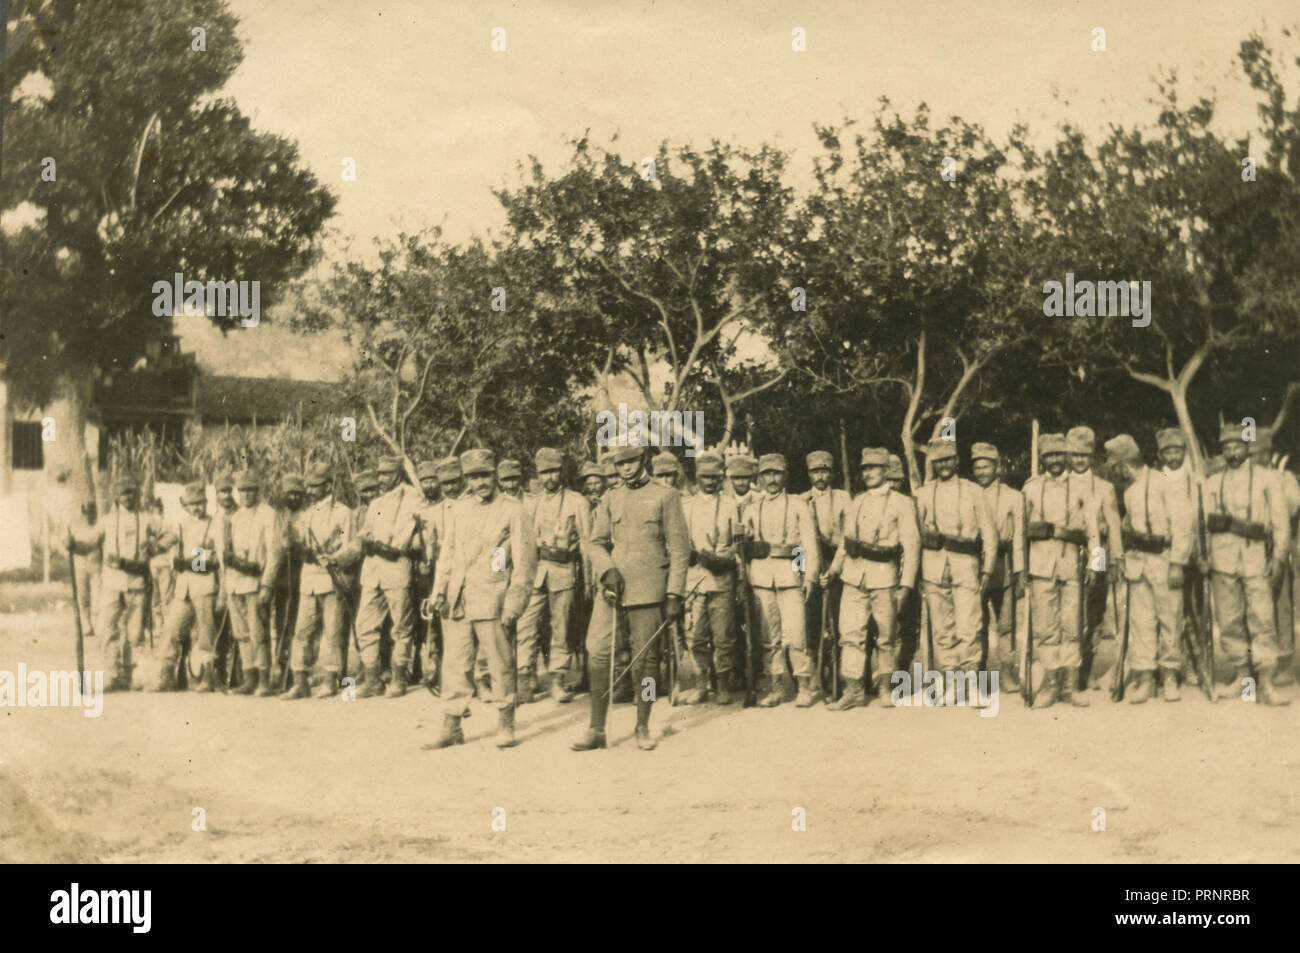 Pelotón del ejército italiano, 1910s Foto de stock